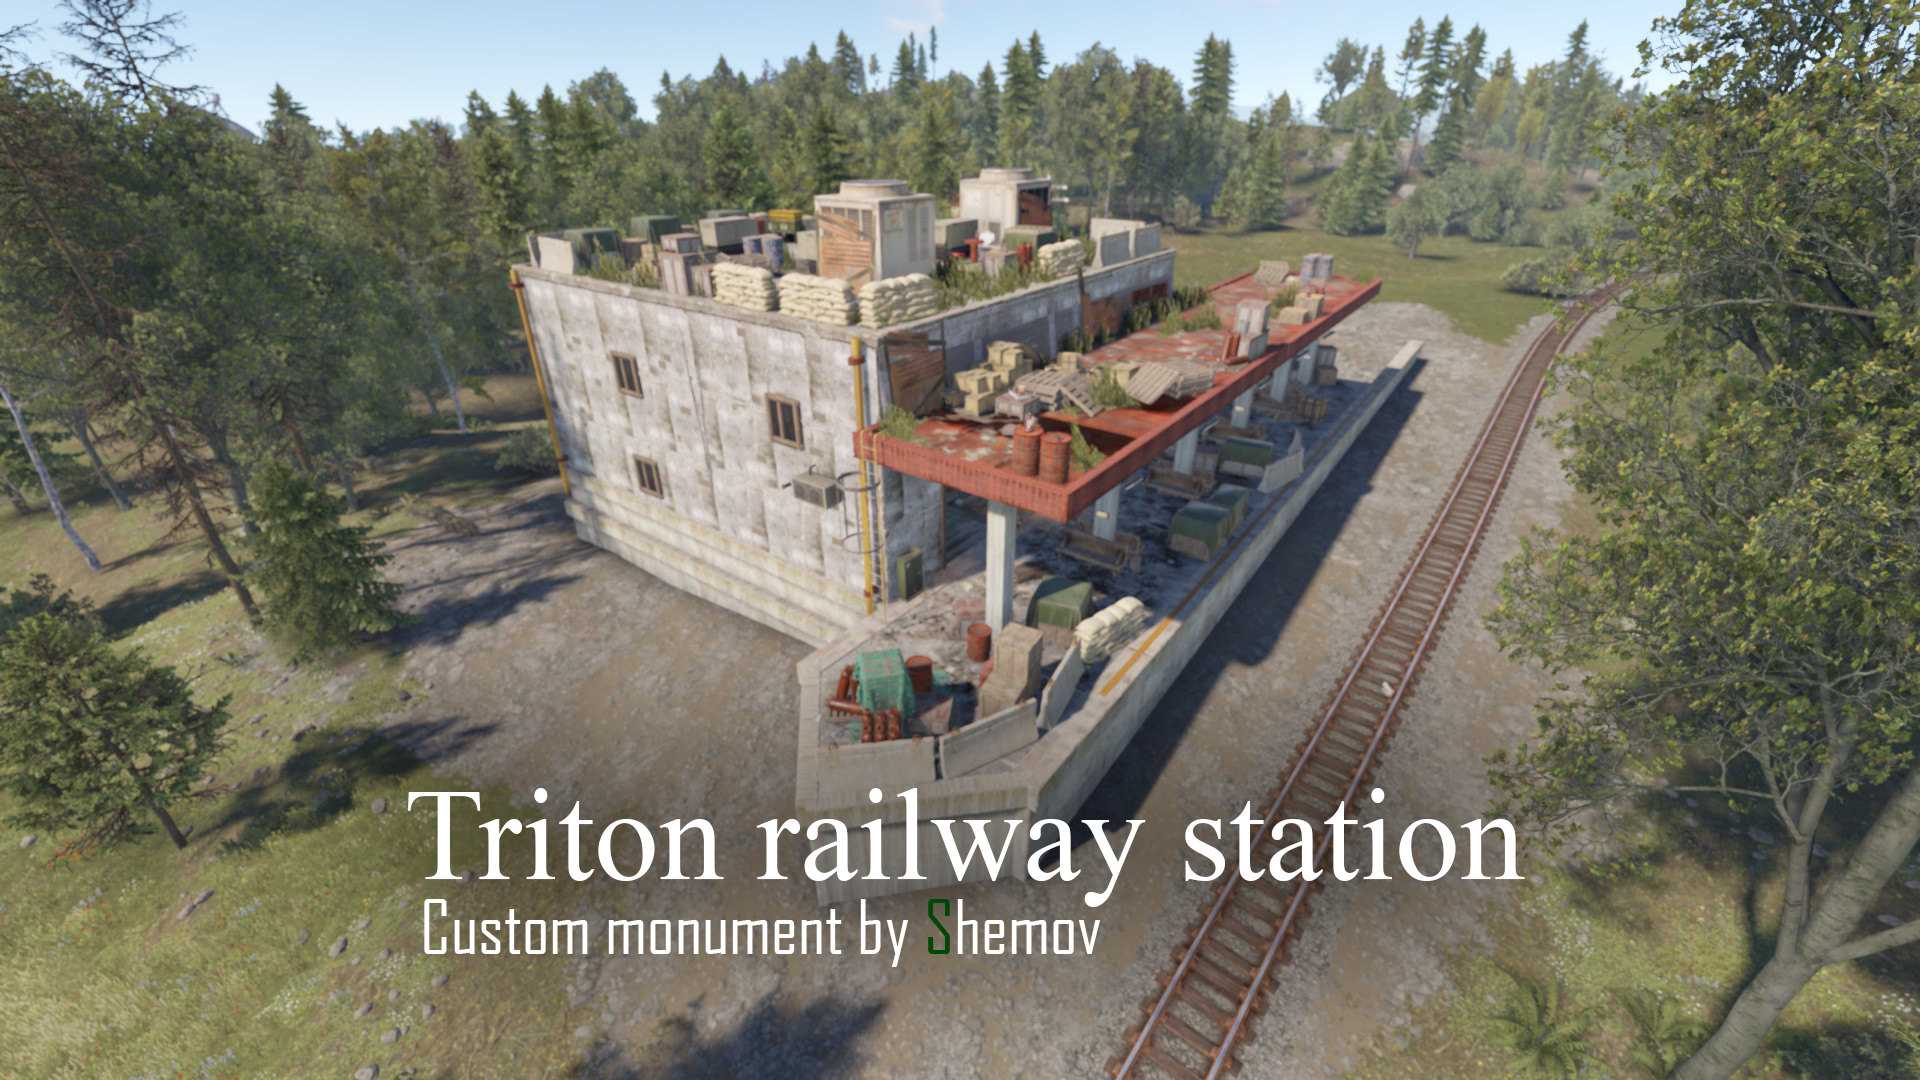 Triton railway station | Custom monument by Shemov